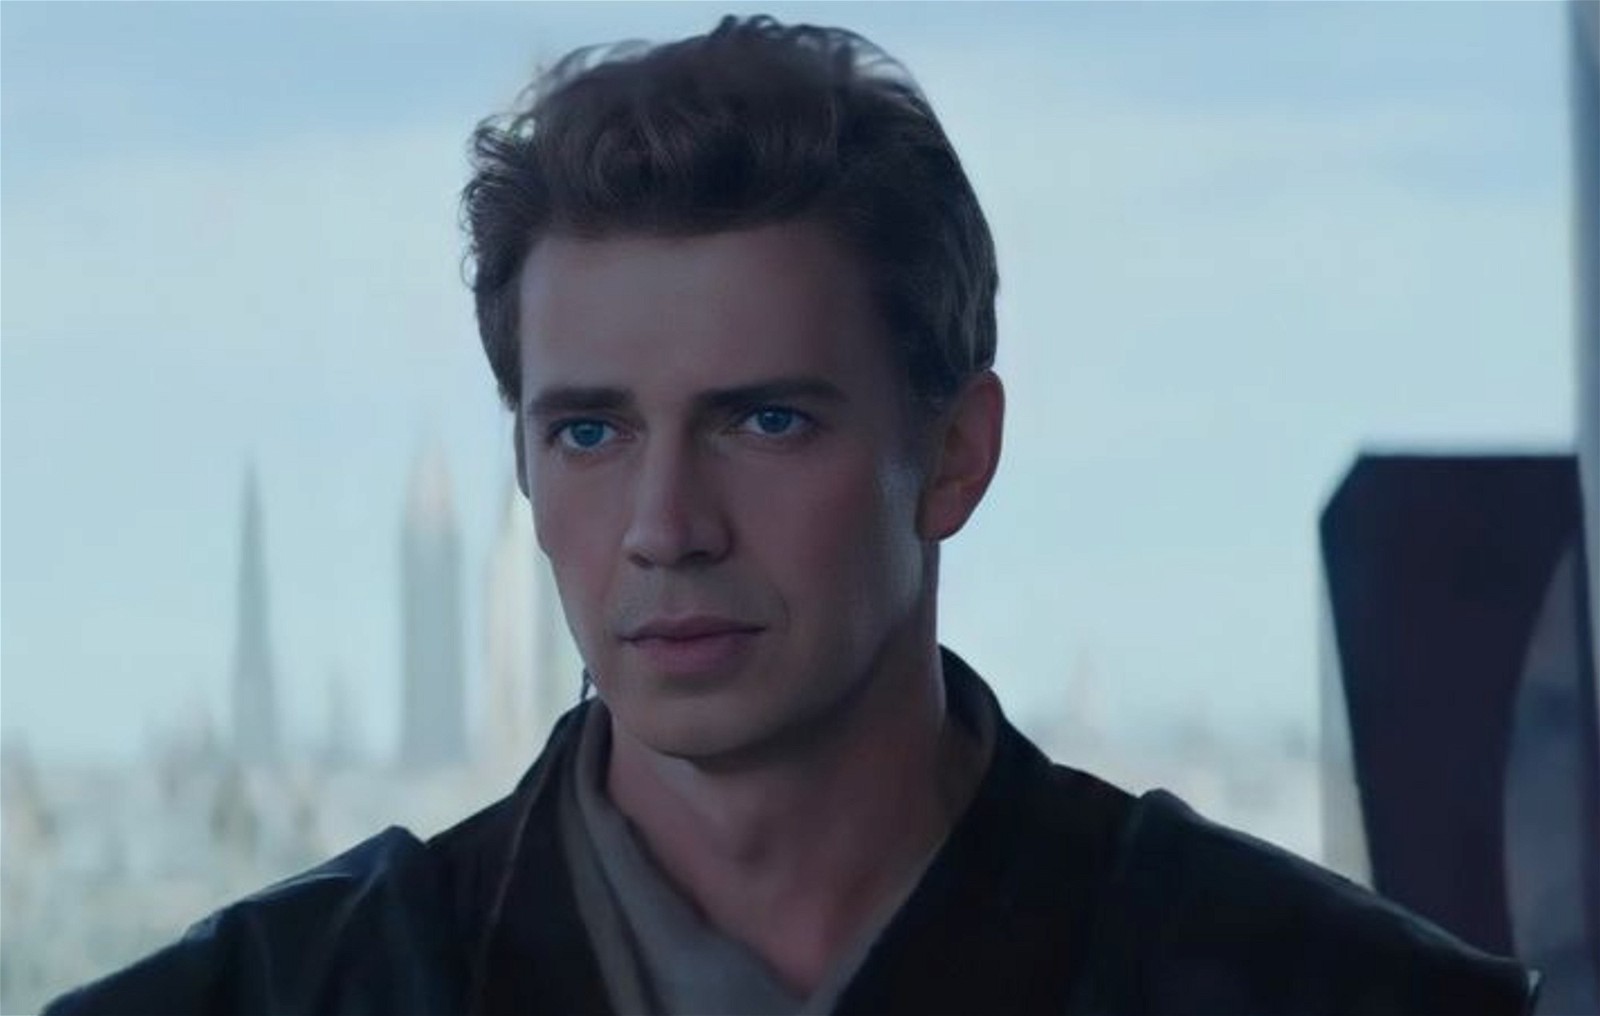 Hayden Christensen's Anakin Skywalker made his recent appearance in the Disney plus series Ahsoka